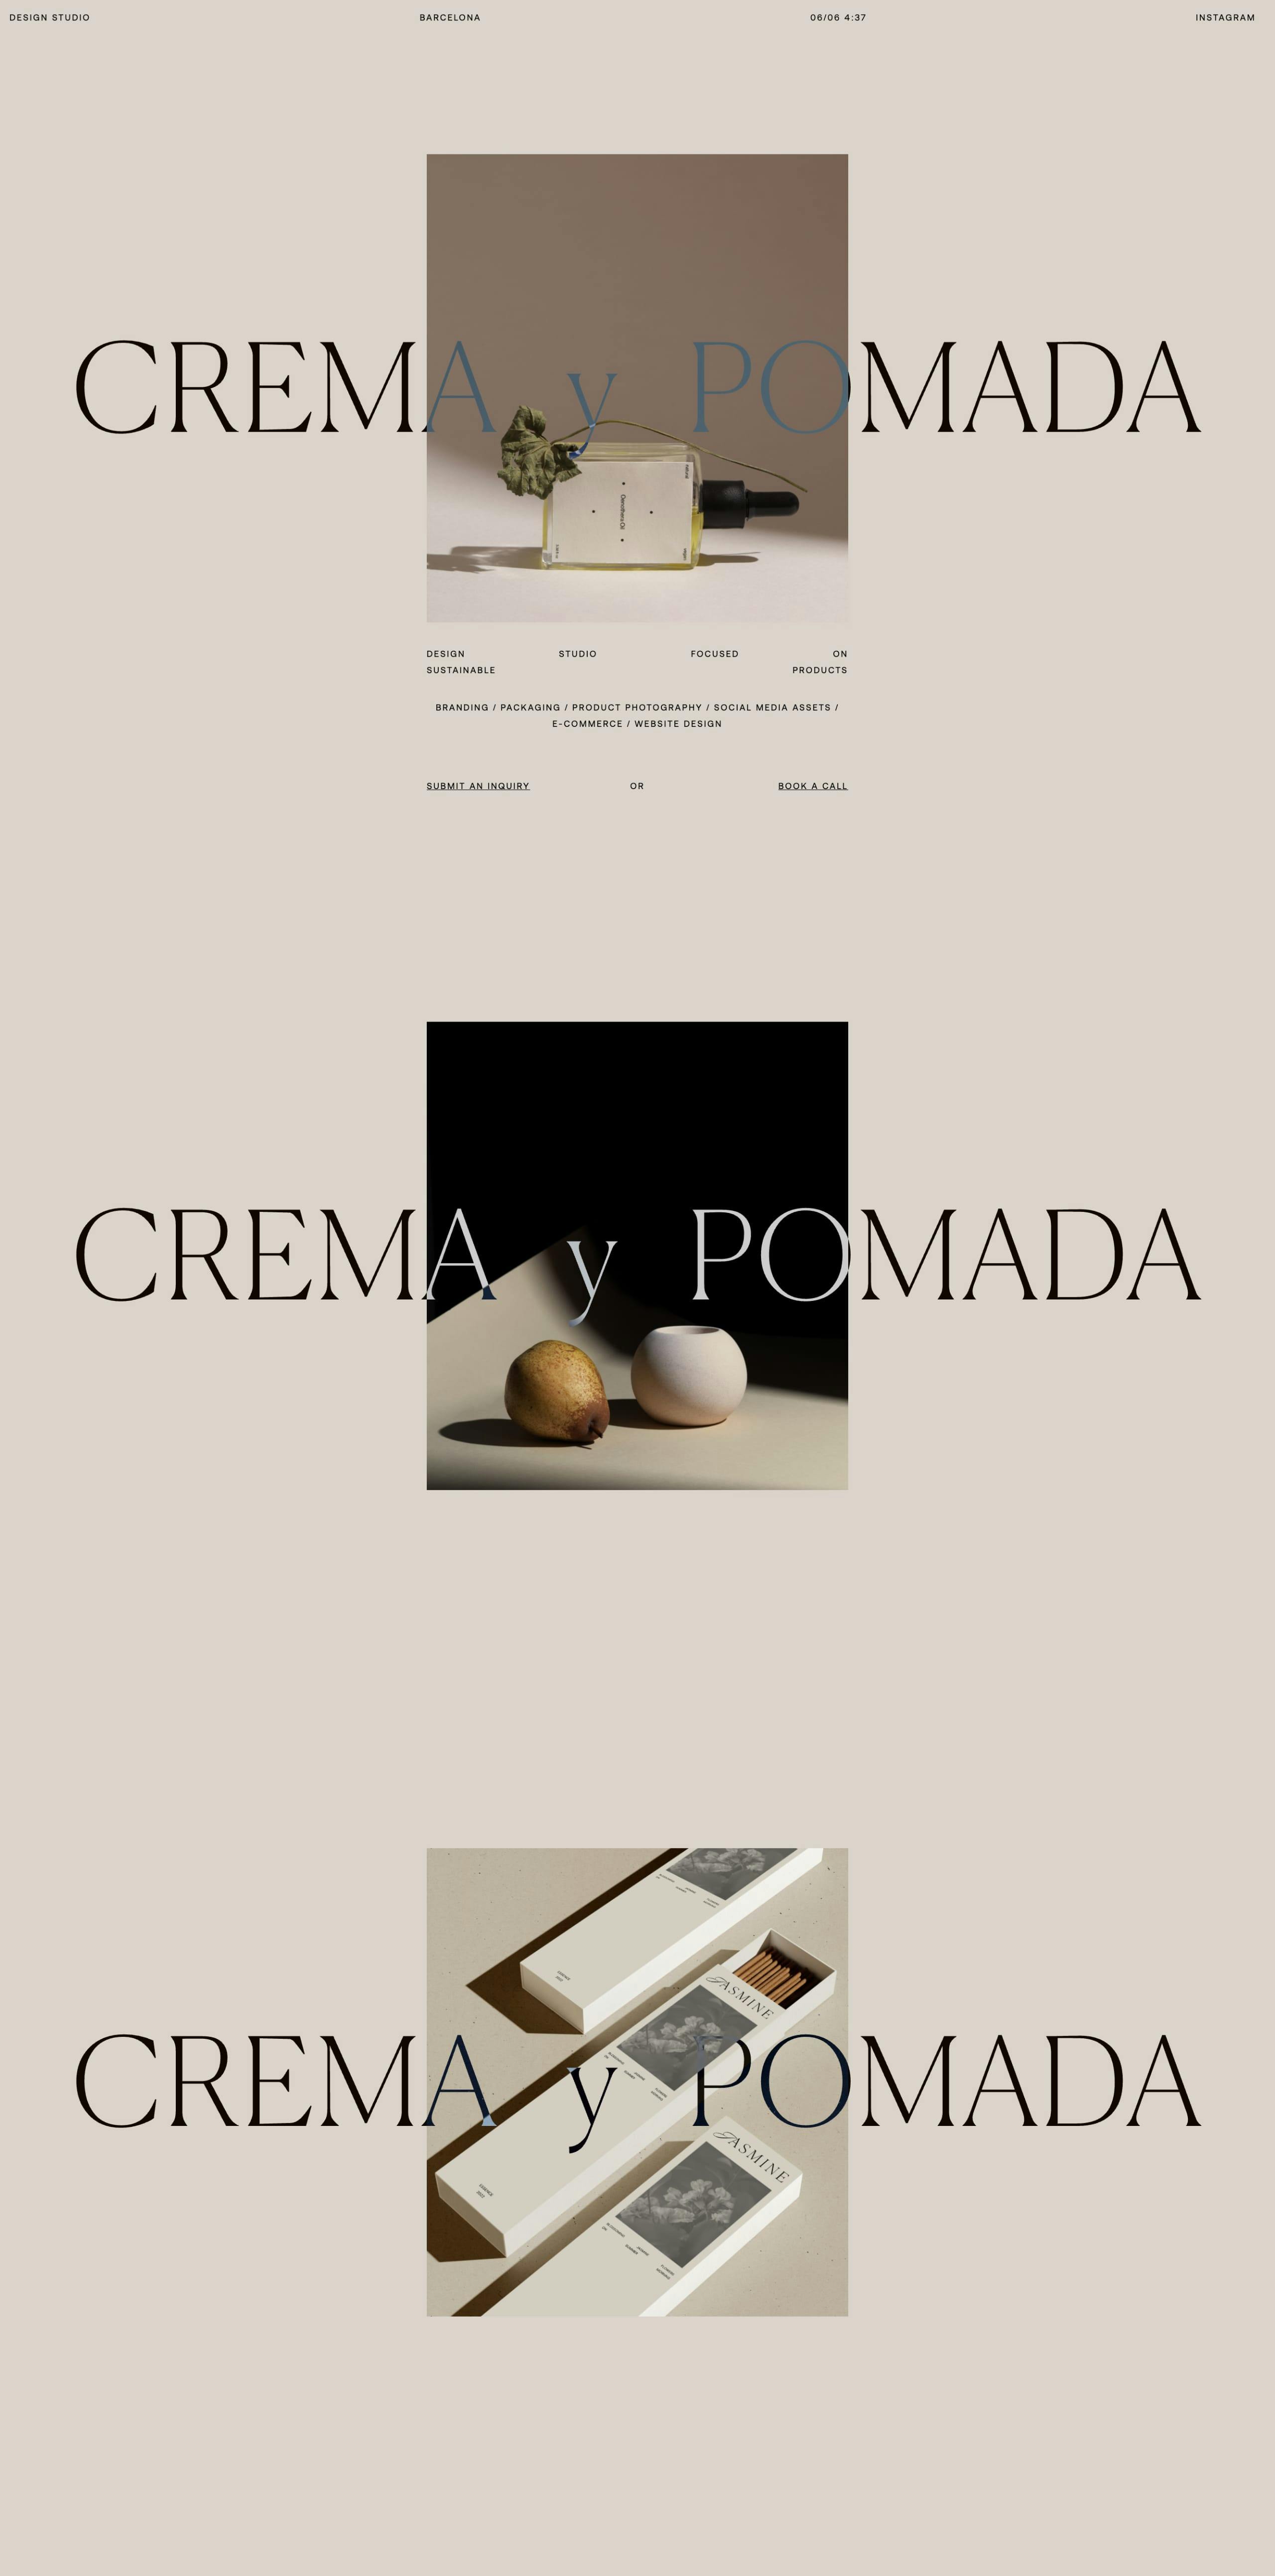 Crema y Pomada Website Screenshot